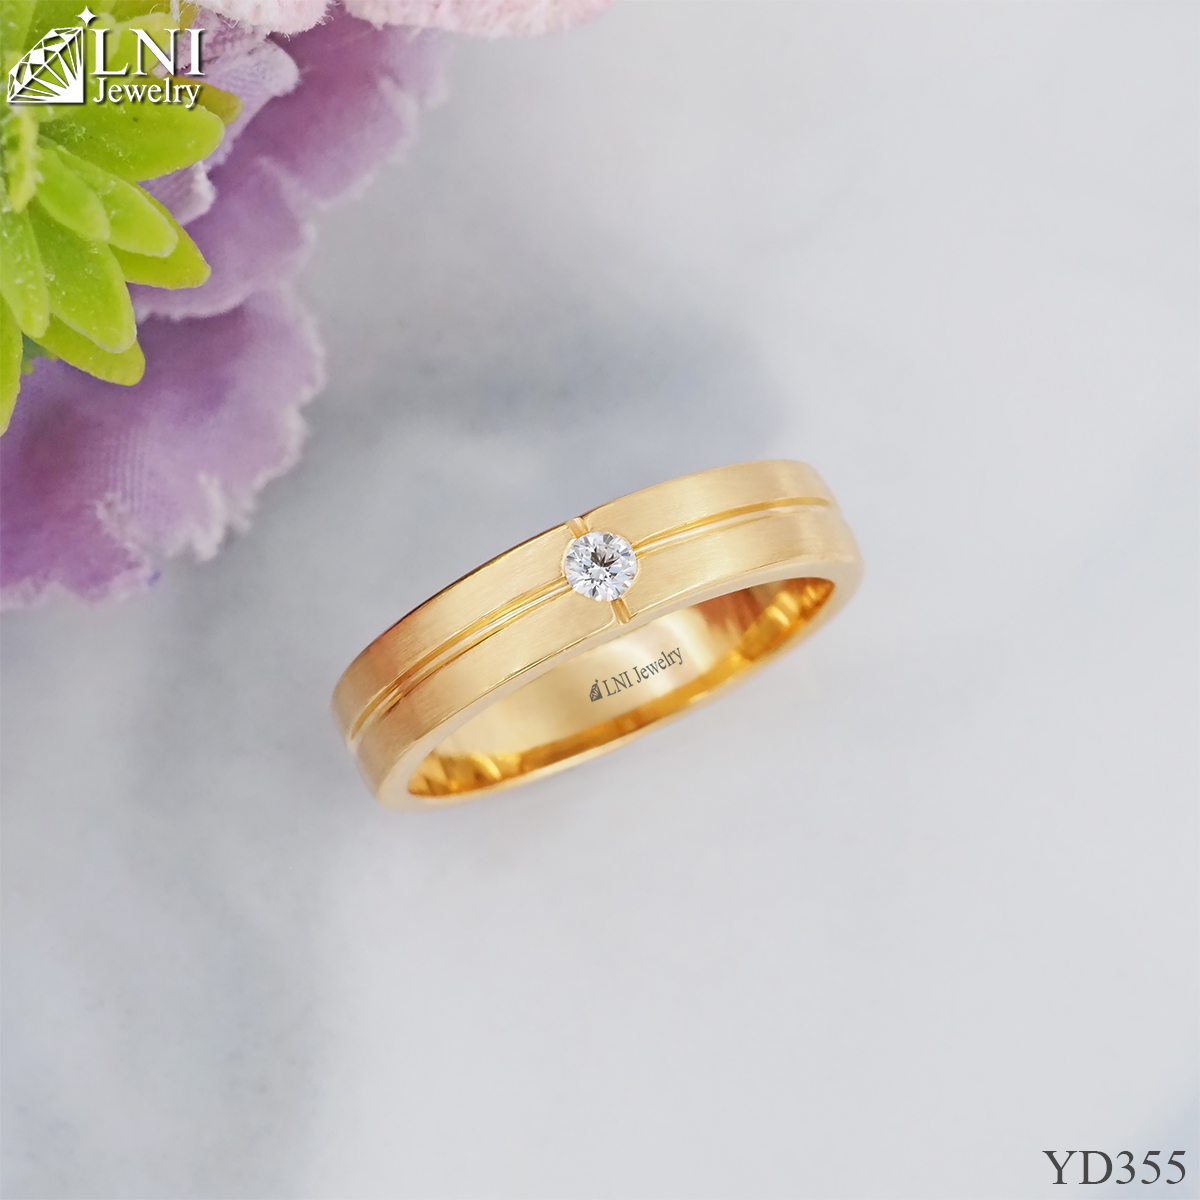 YD355 Single Diamond Ring